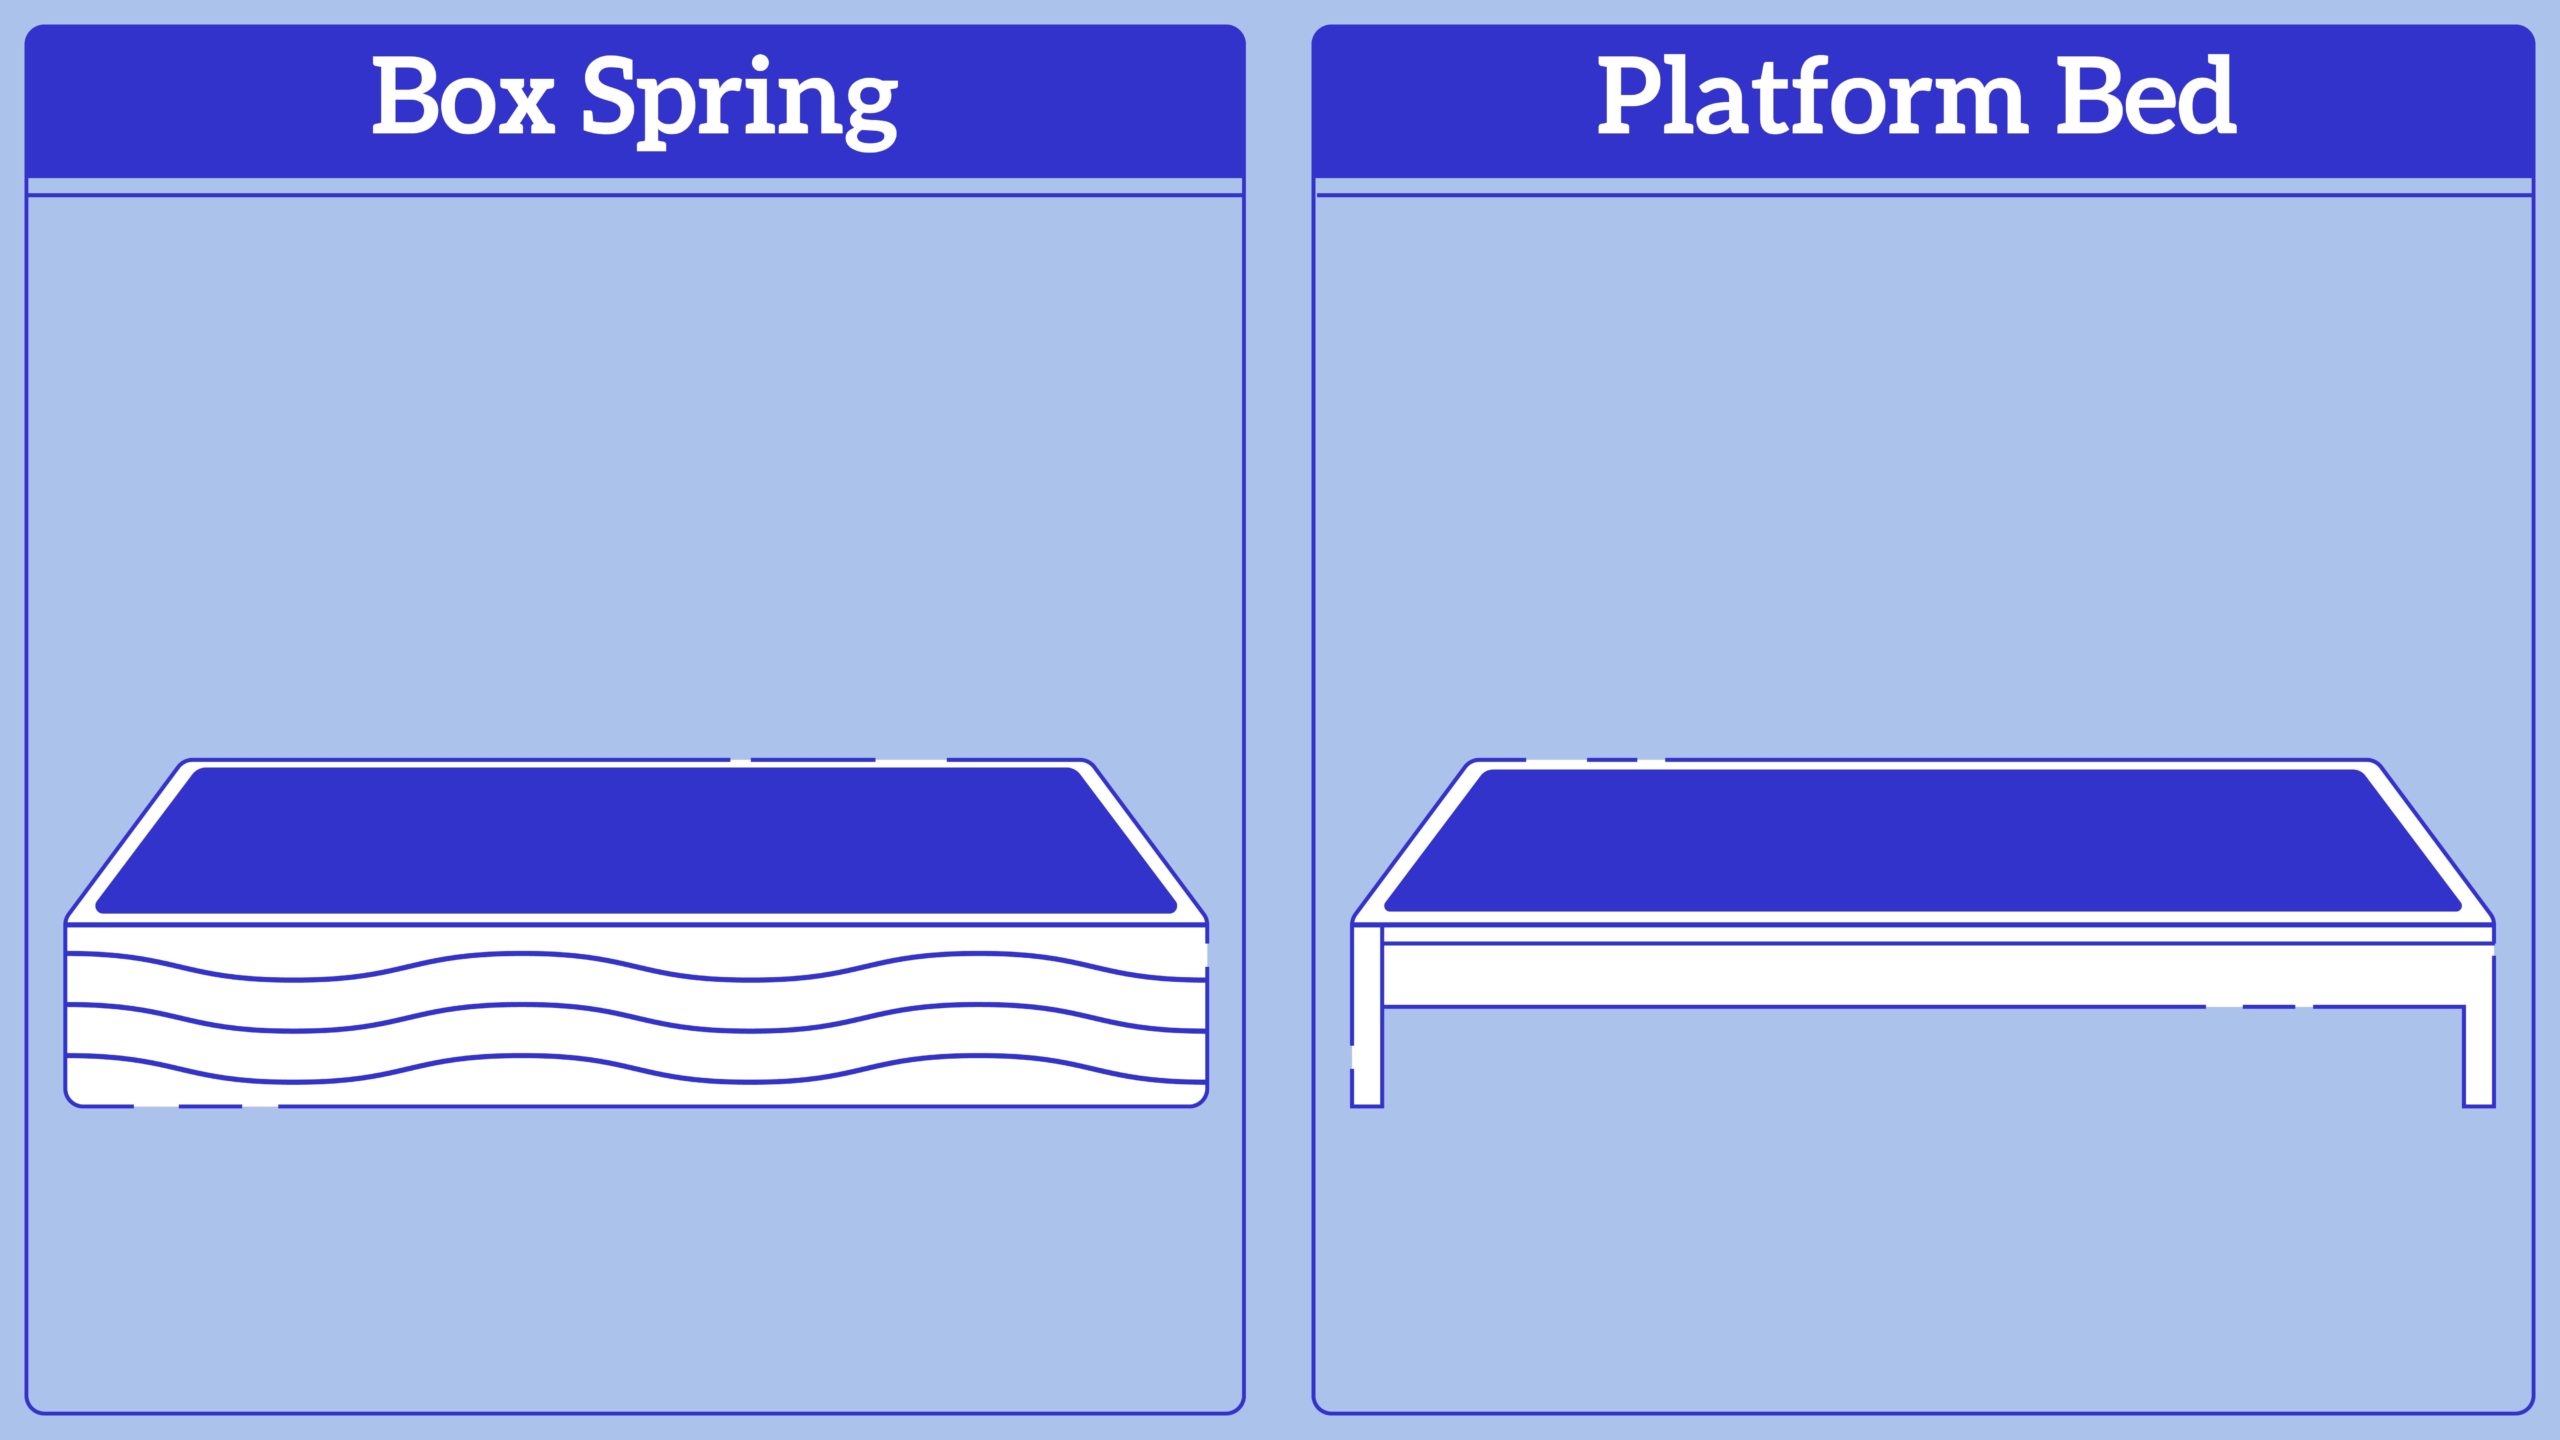 Platform Bed vs. Box Spring